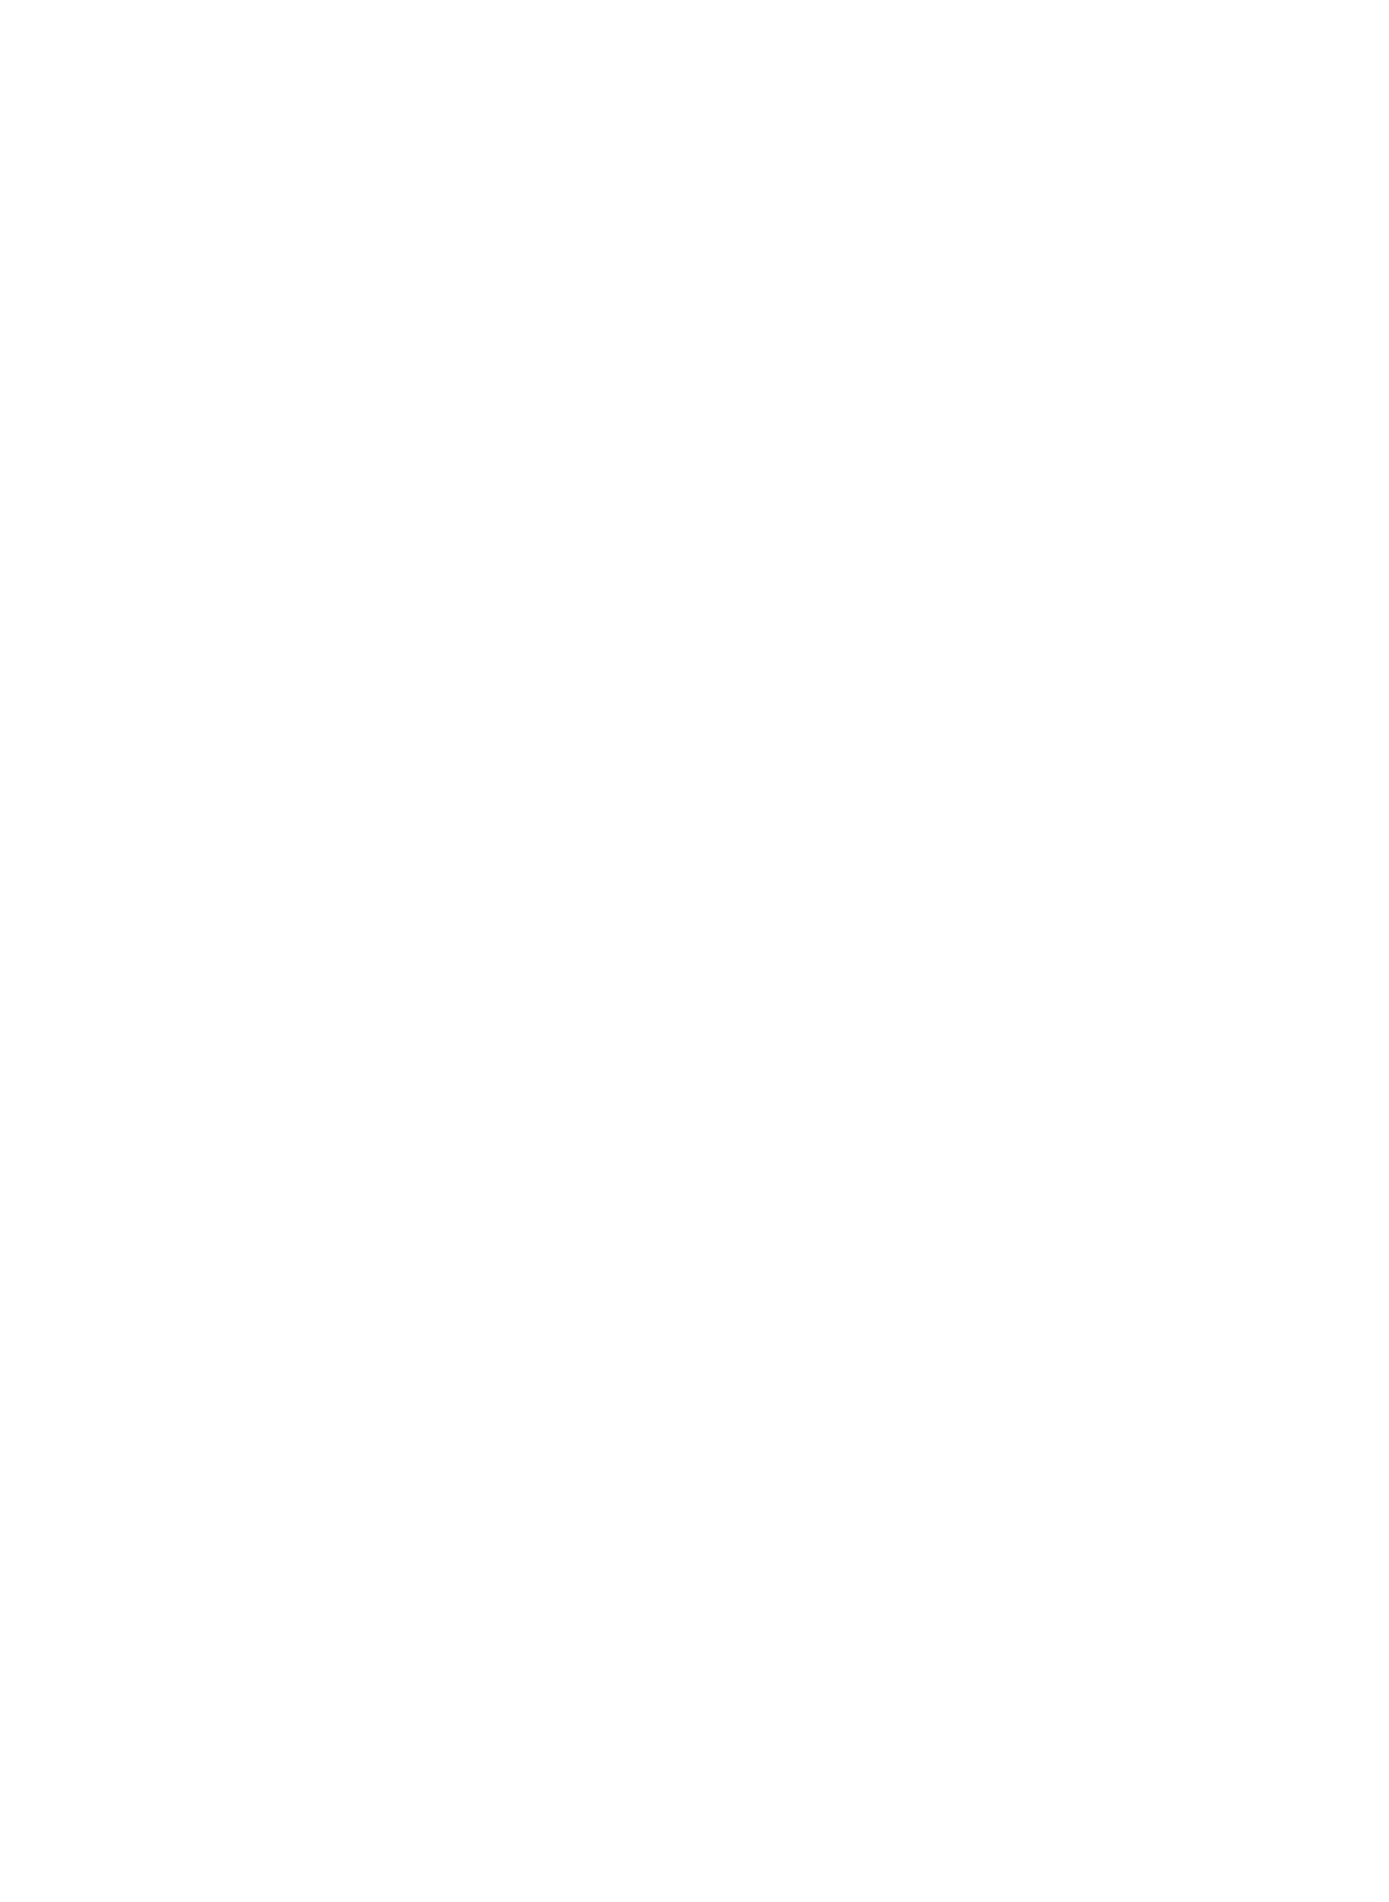 2M awarded the queens award for enterprise, international trade 2019